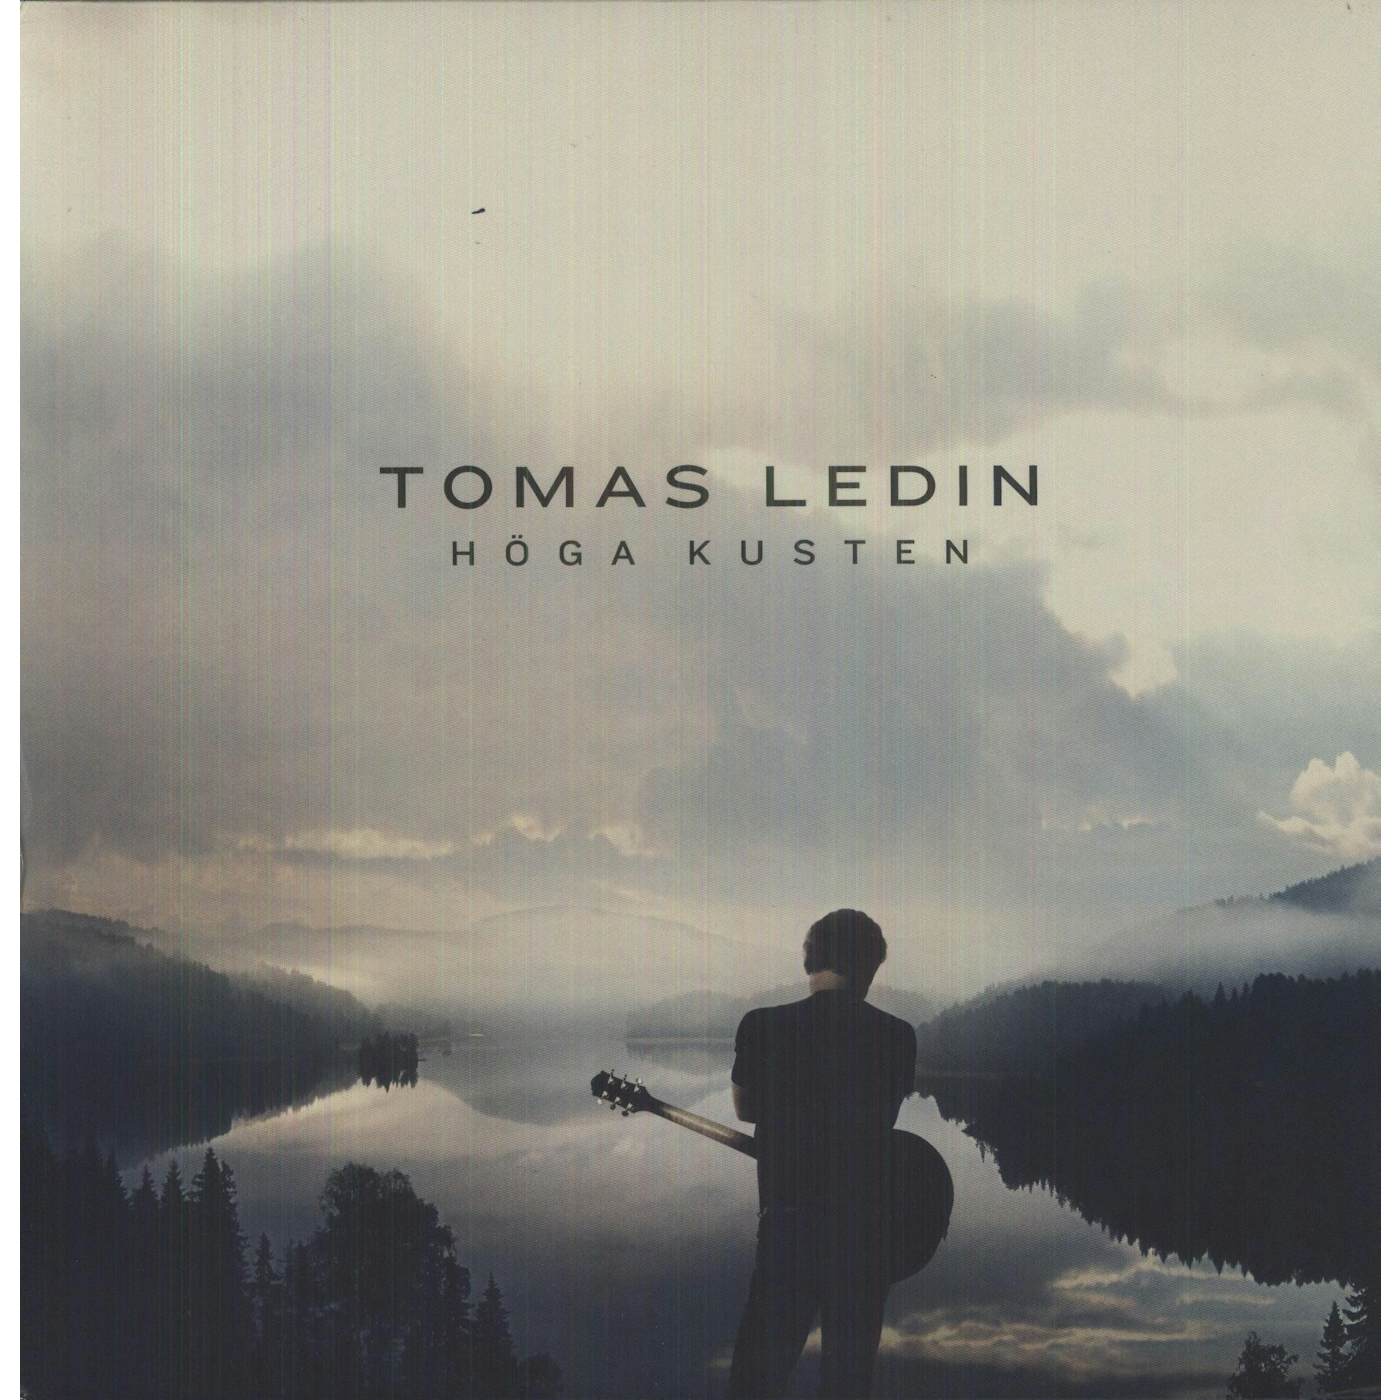 Tomas Ledin HOGA KUSTEN Vinyl Record